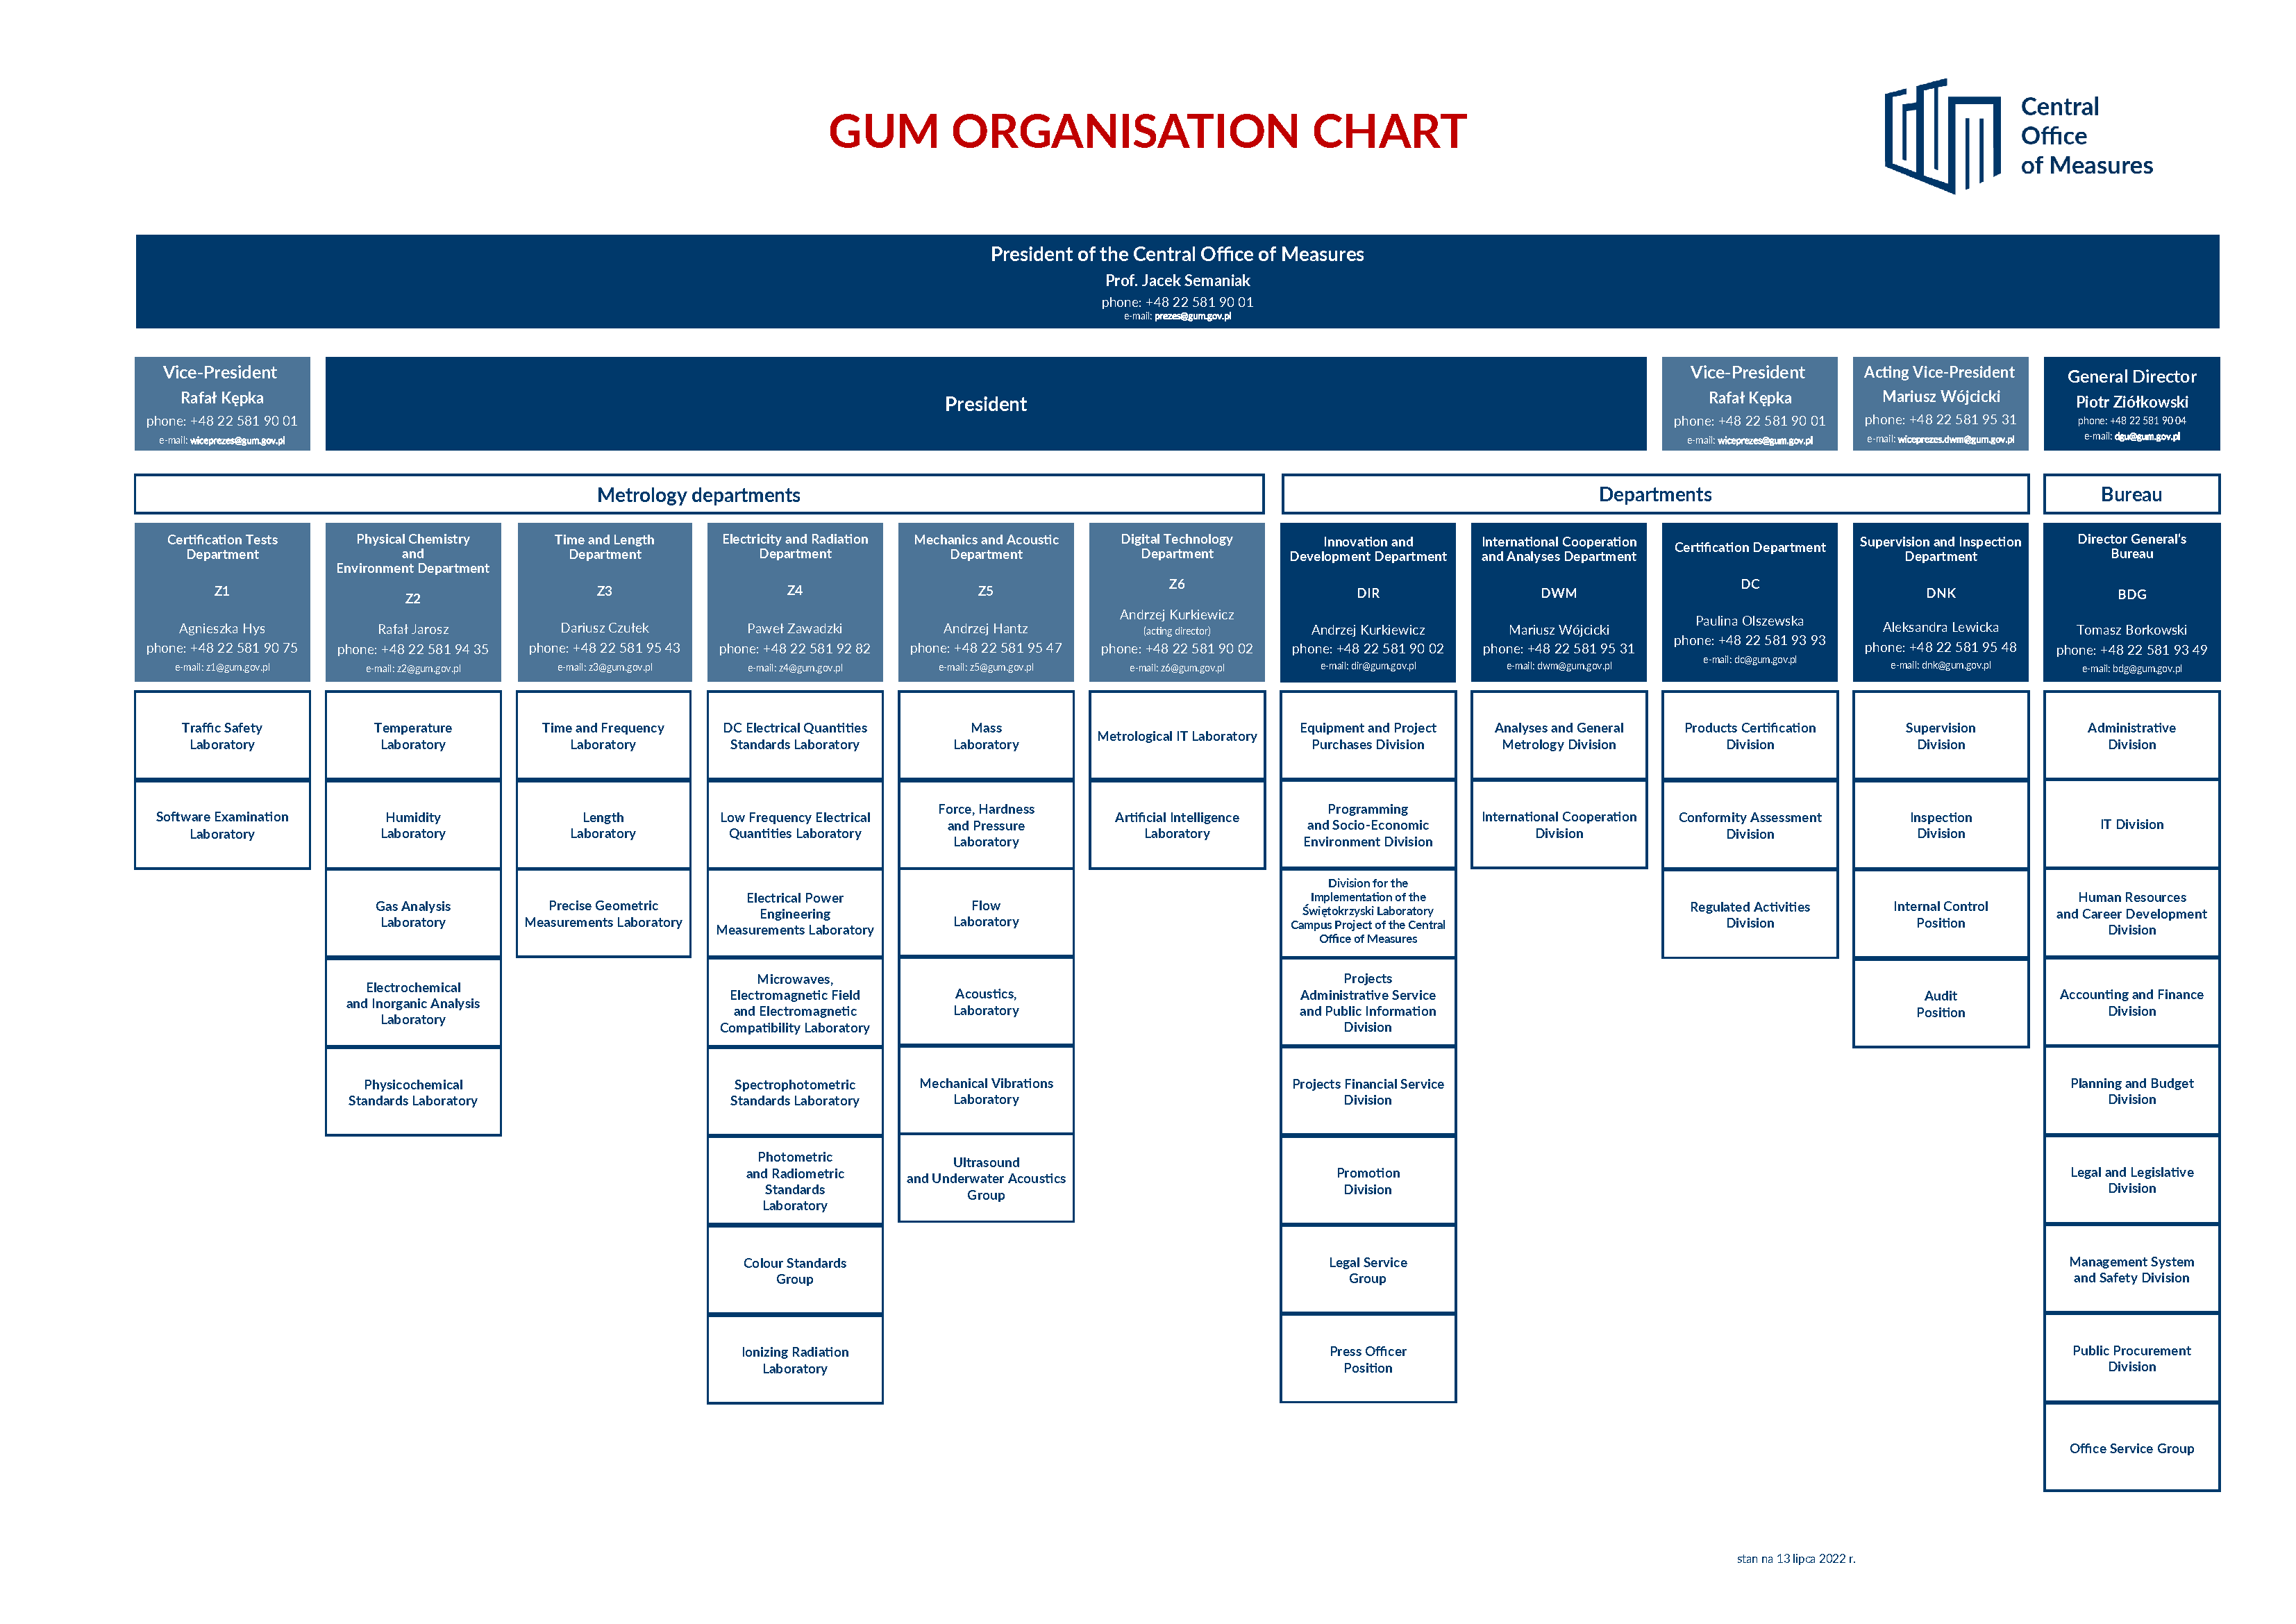 GUM organizational chart